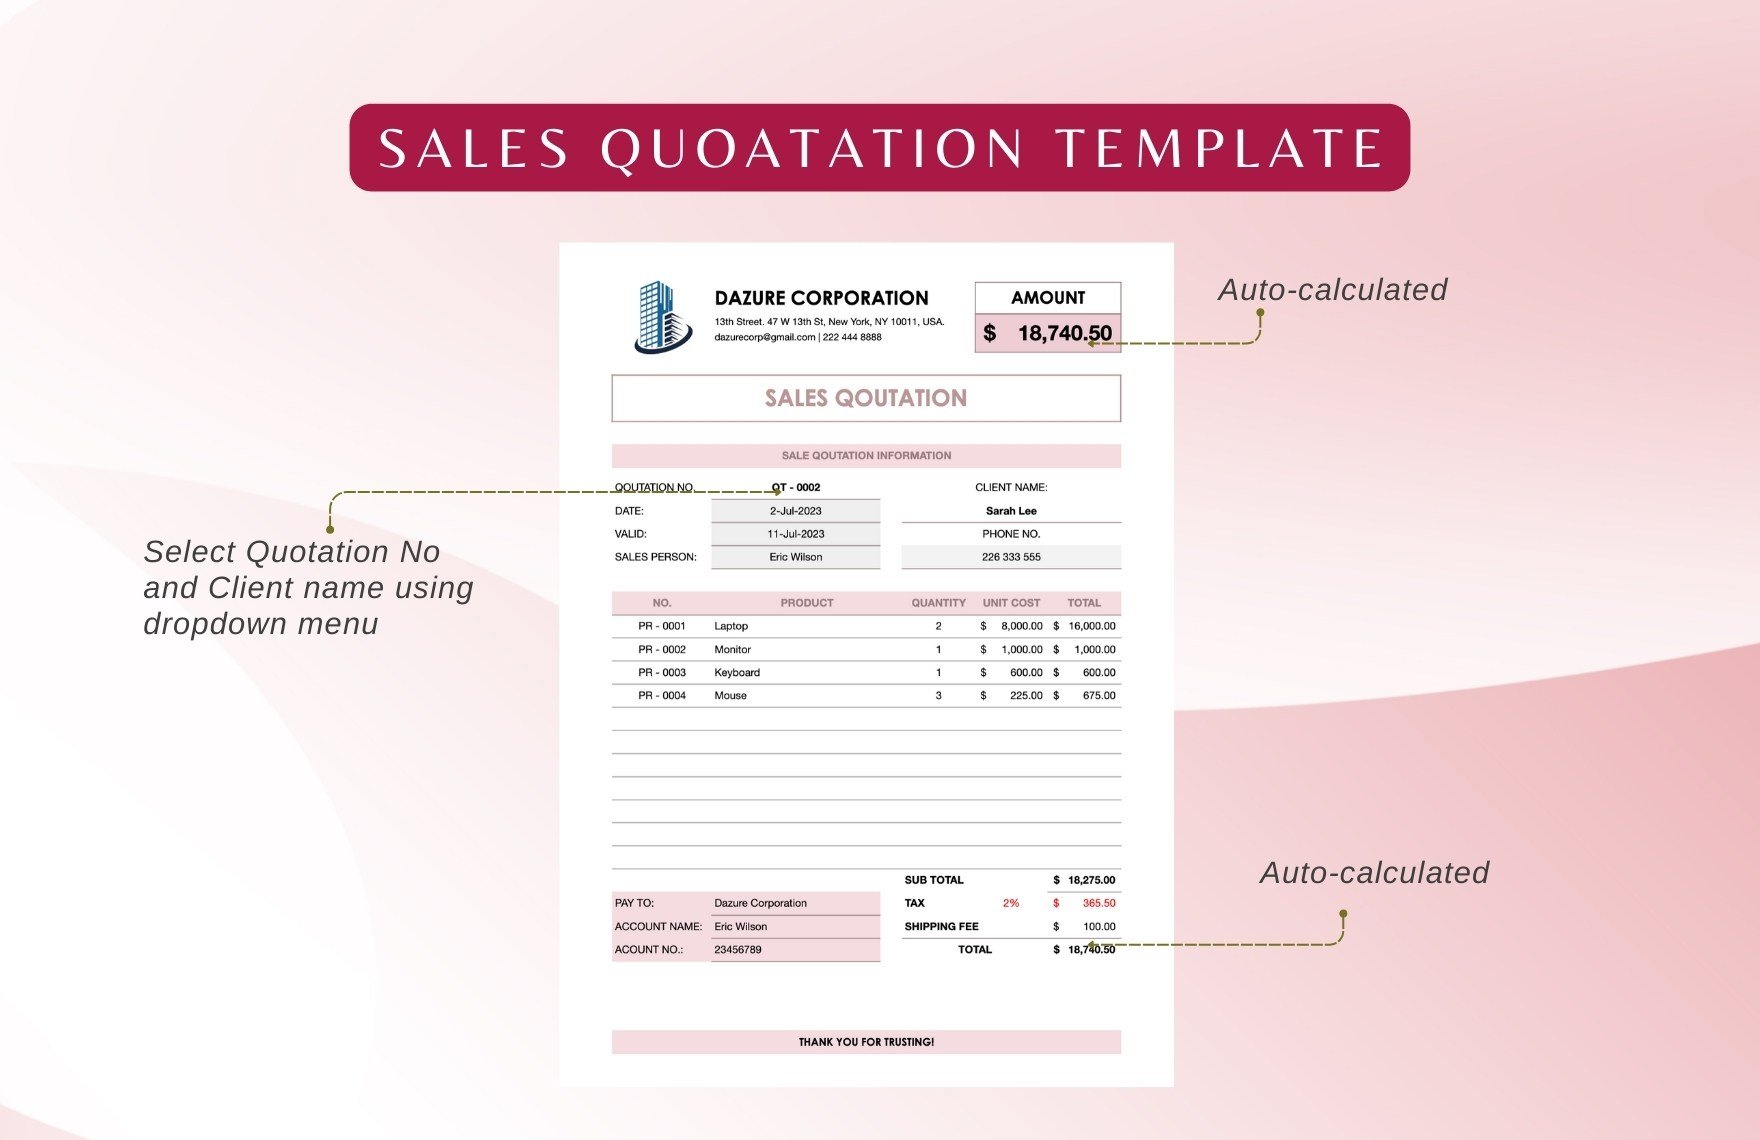 Sales Quotation Template